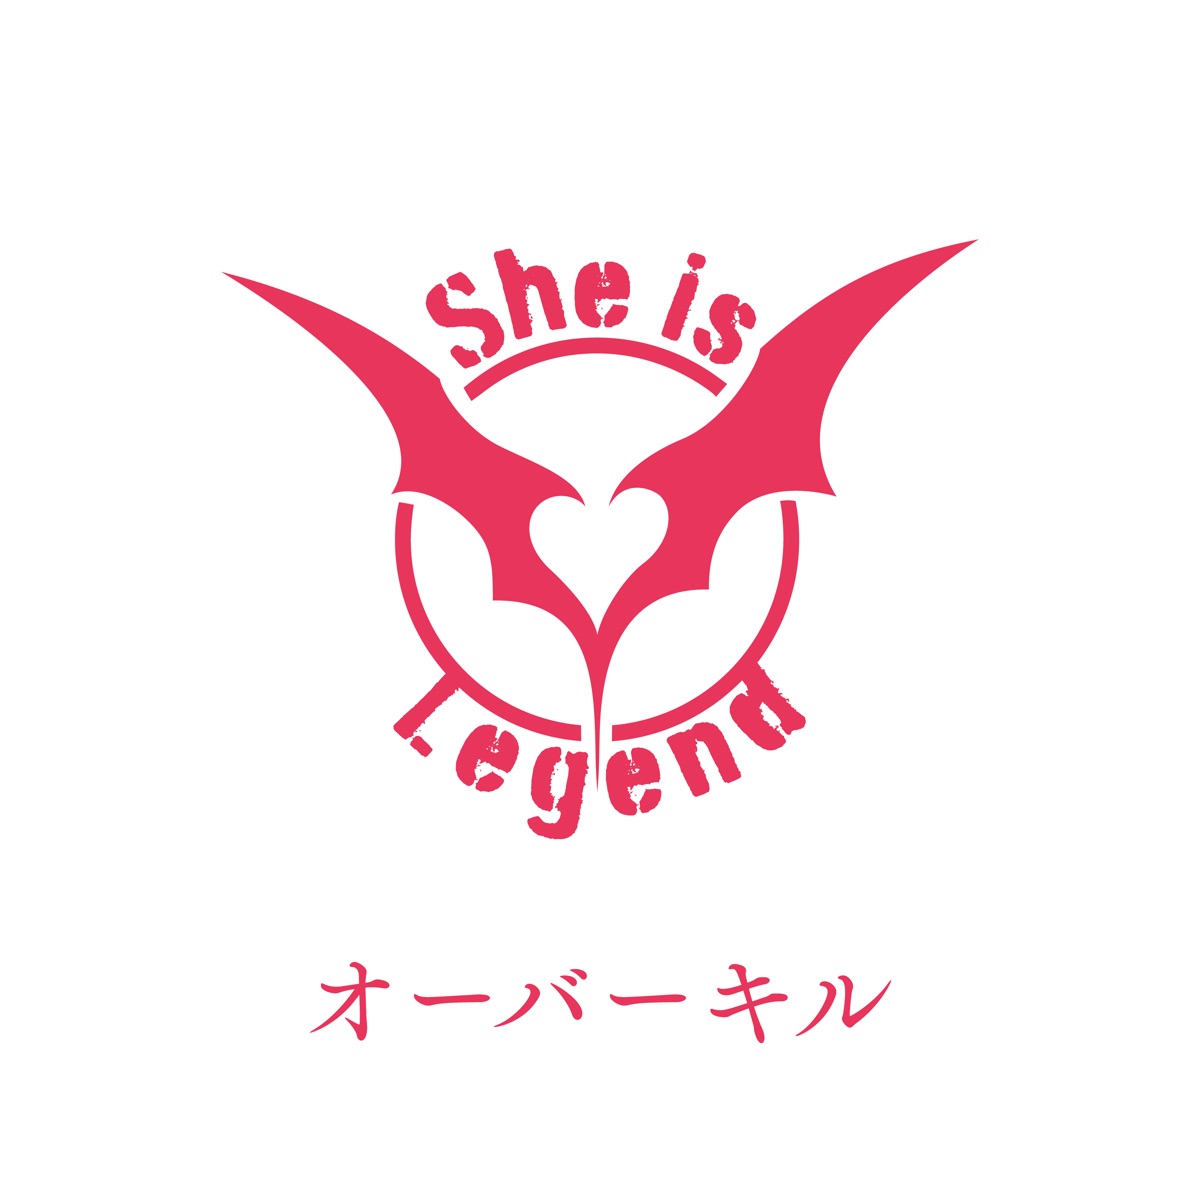 『She is Legend - オーバーキル 歌詞』収録の『オーバーキル』ジャケット